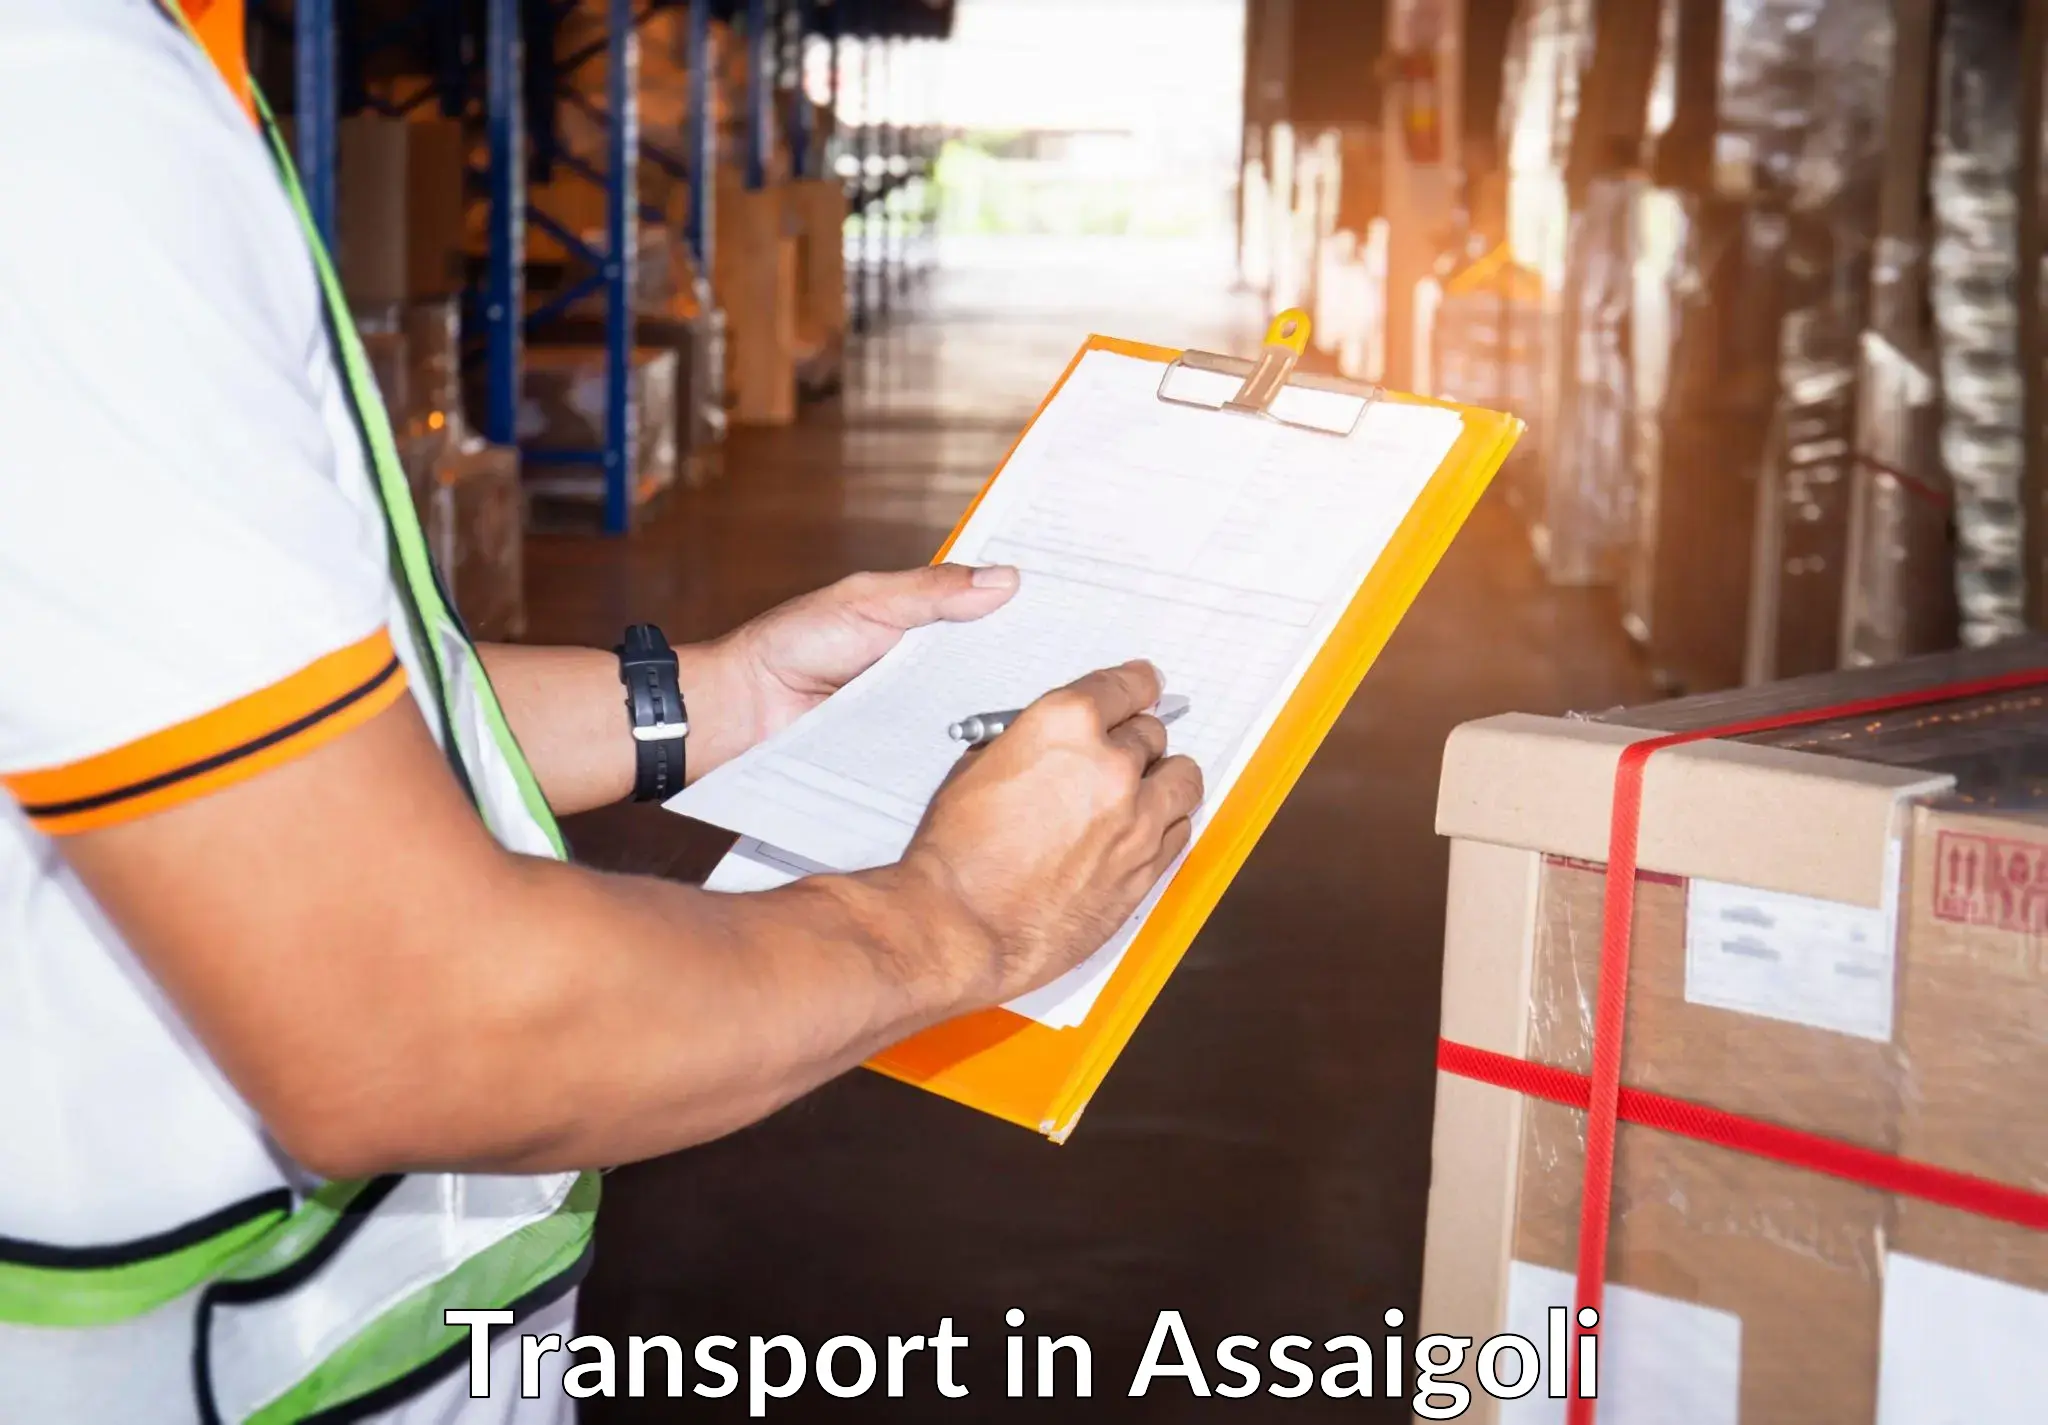 Transport in sharing in Assaigoli